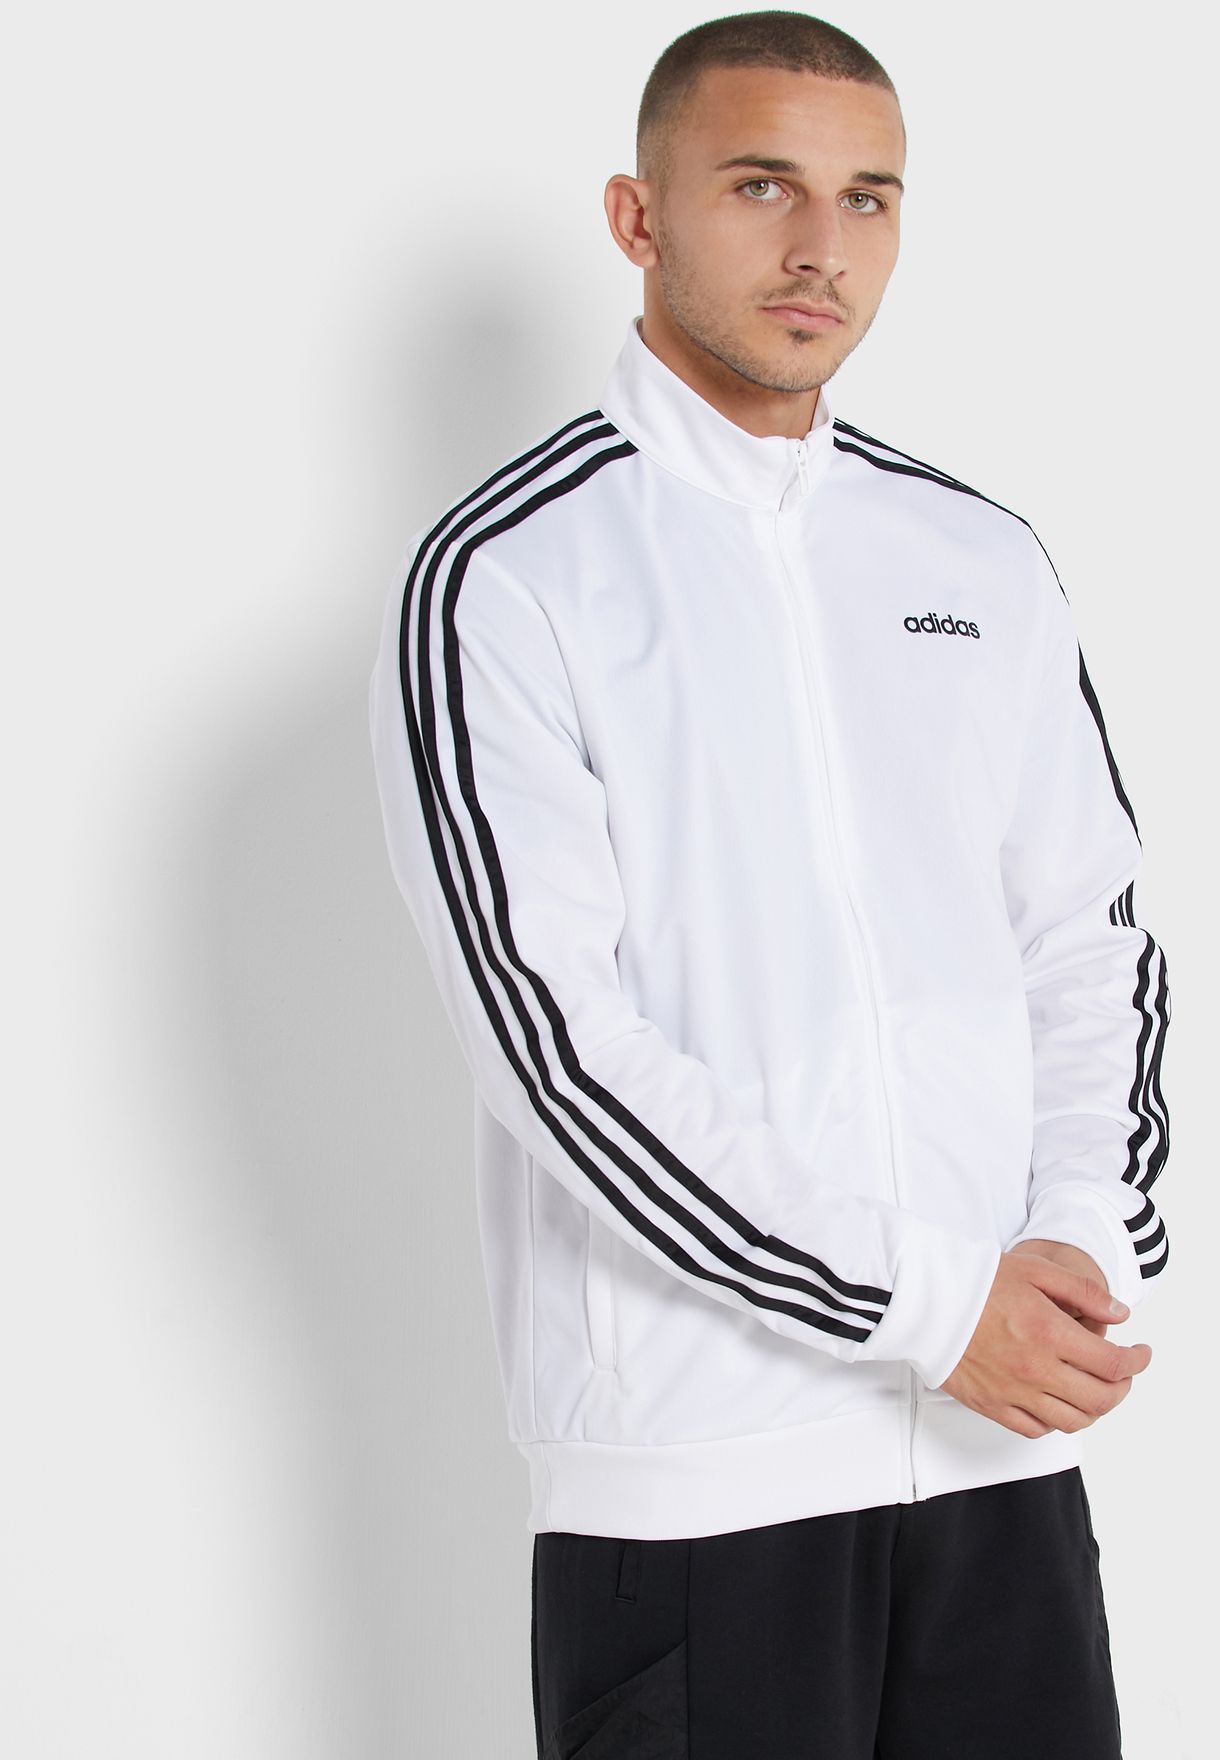 adidas white jacket mens